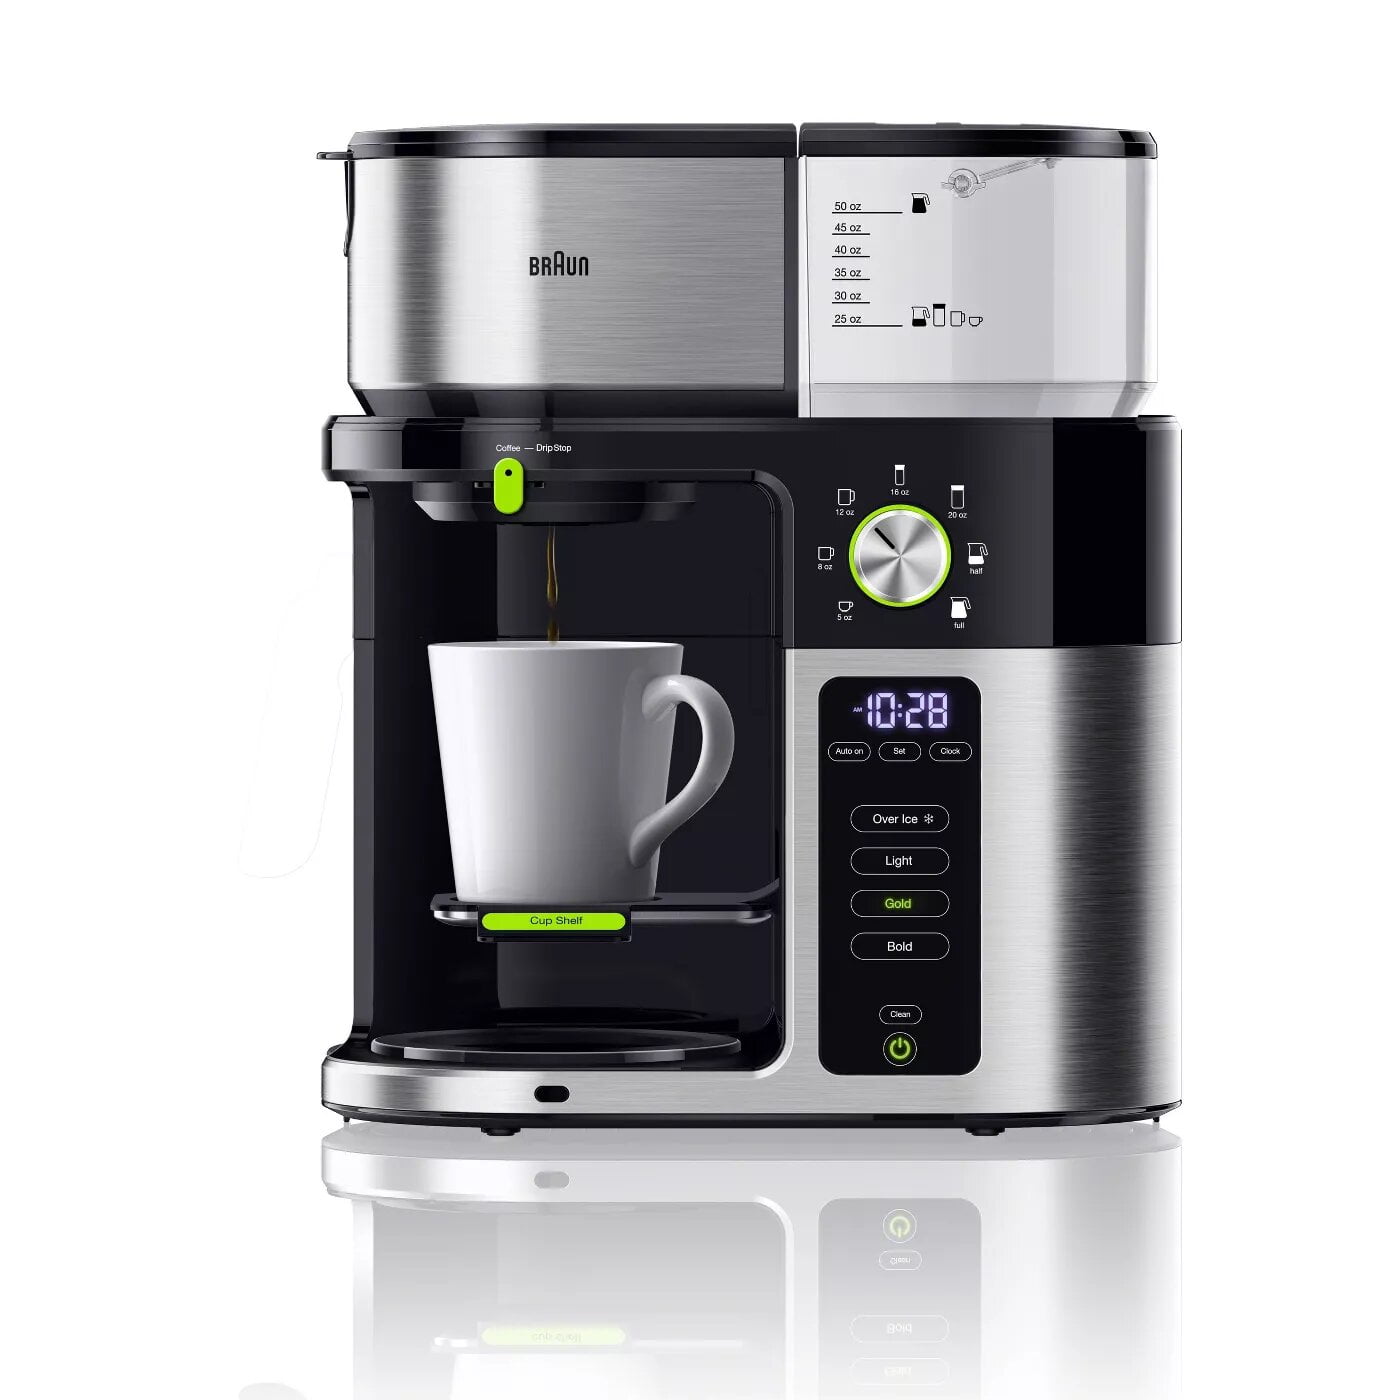 Braun MultiServe Drip Coffee KF9050 - Maker, Black